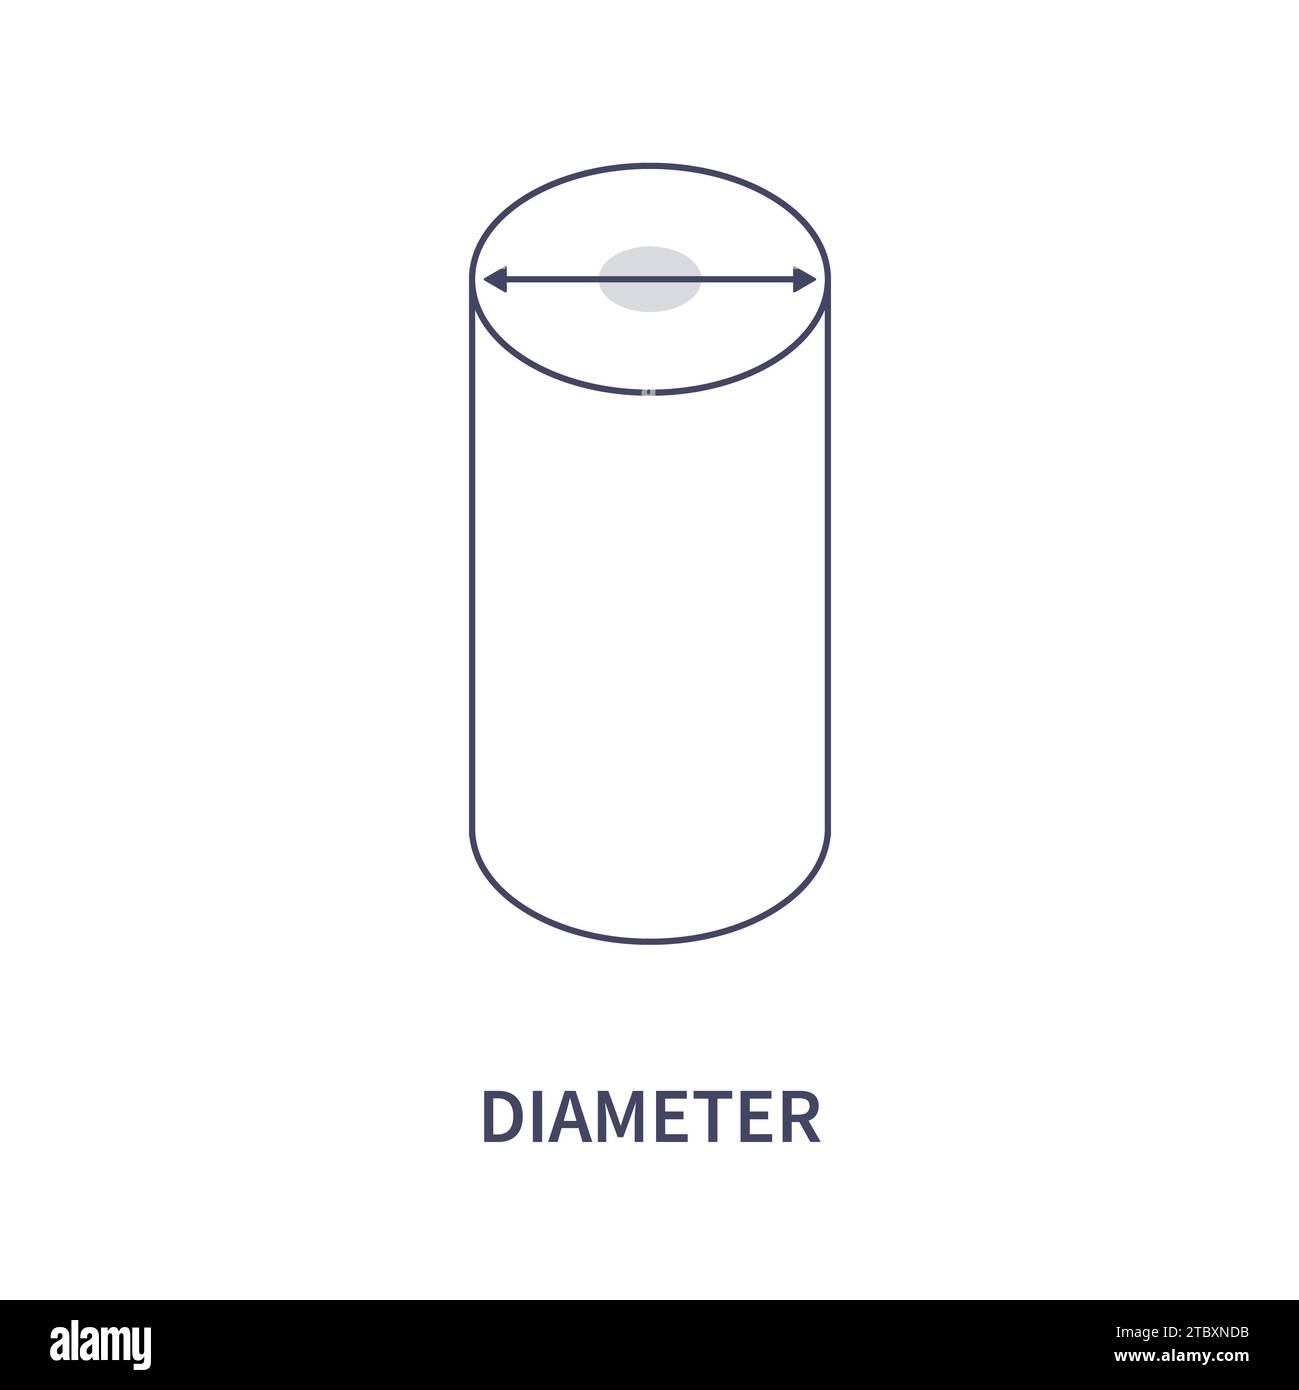 Diameter, conceptual illustration Stock Photo